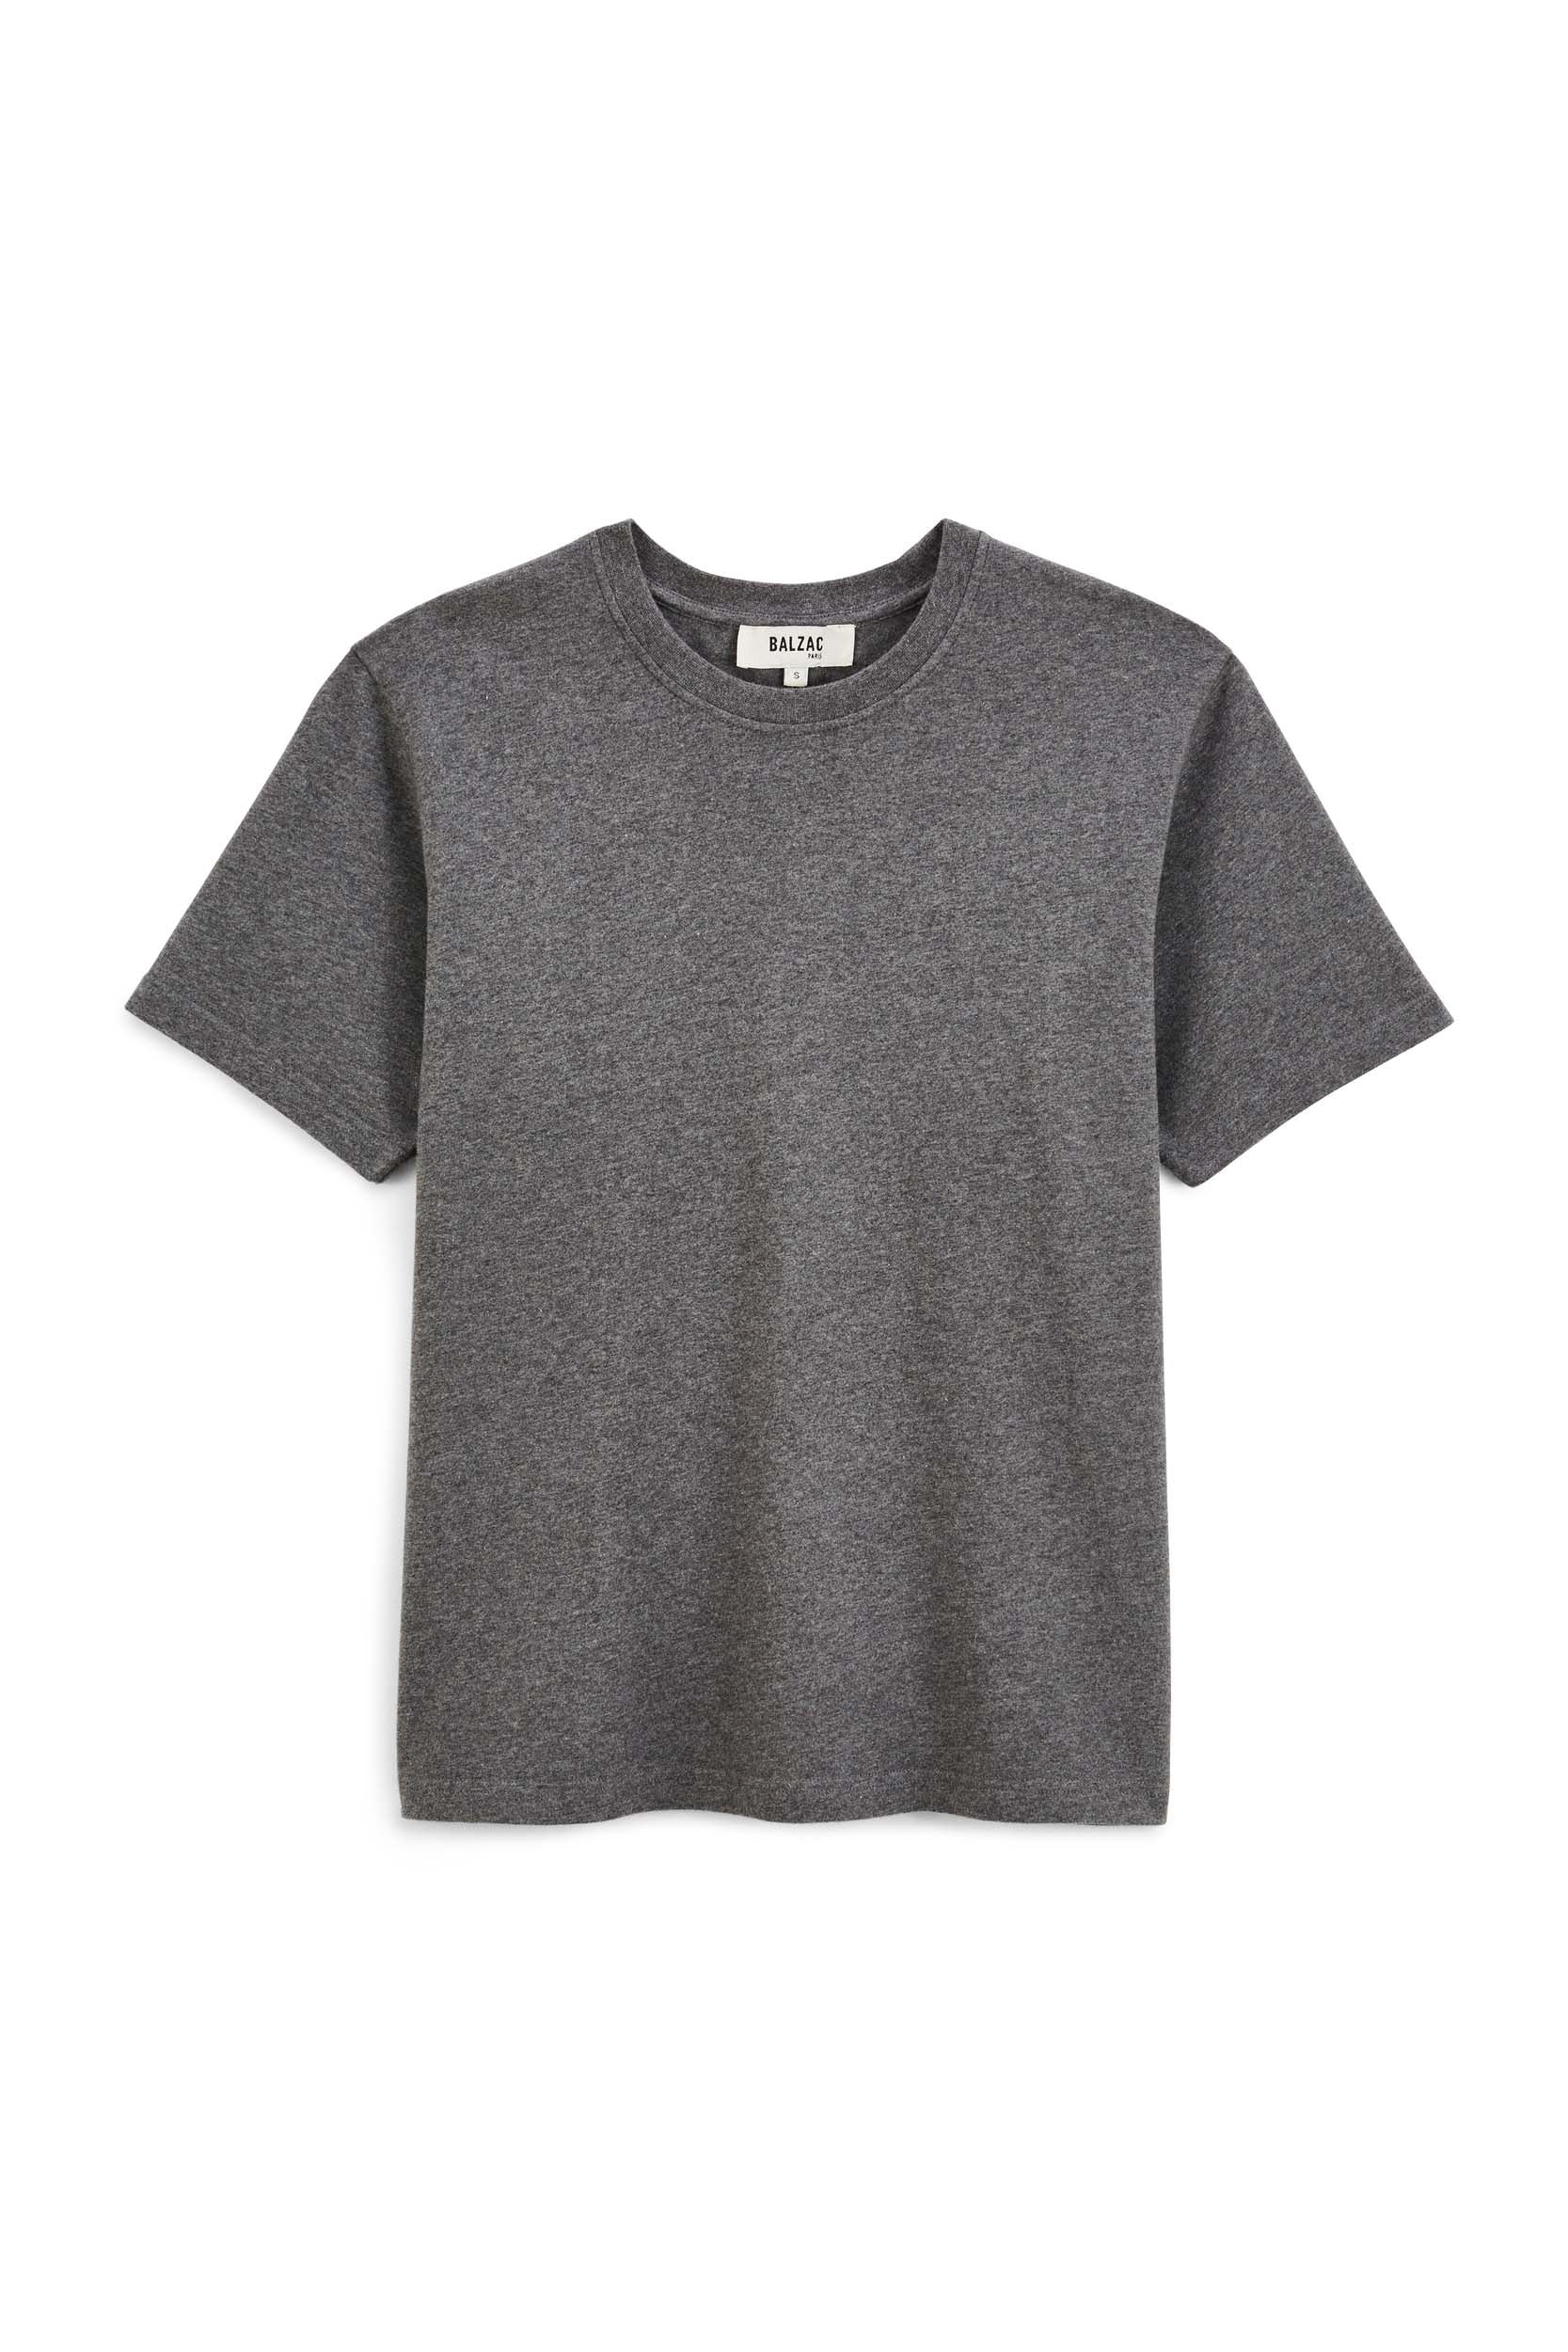 Charcoal gray Bree t-shirt